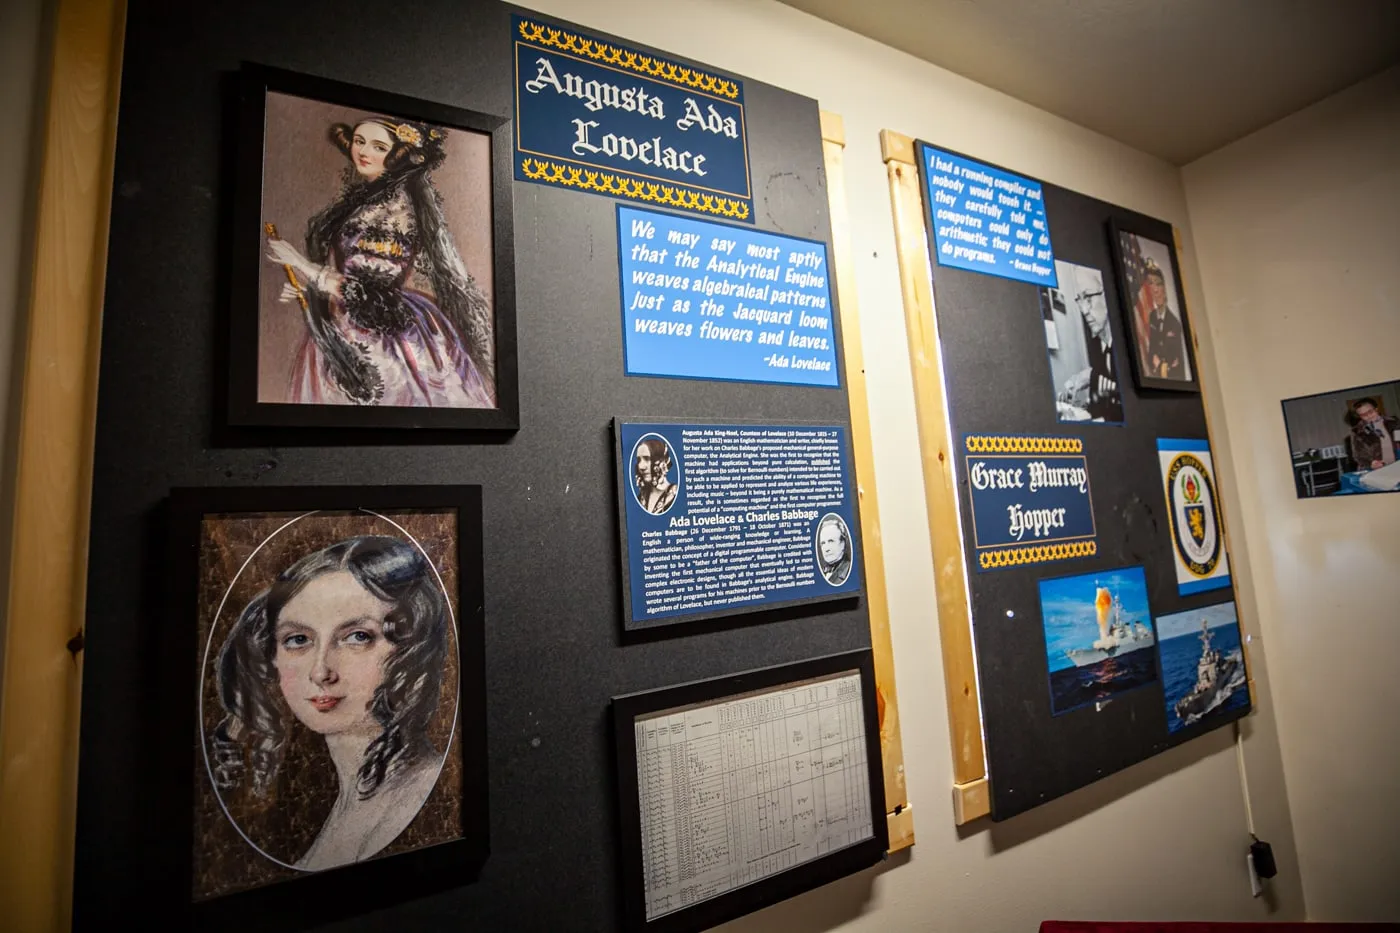 Ada Lovelace and Grace Hopper - American Computer & Robotics Museum in Bozeman, Montana